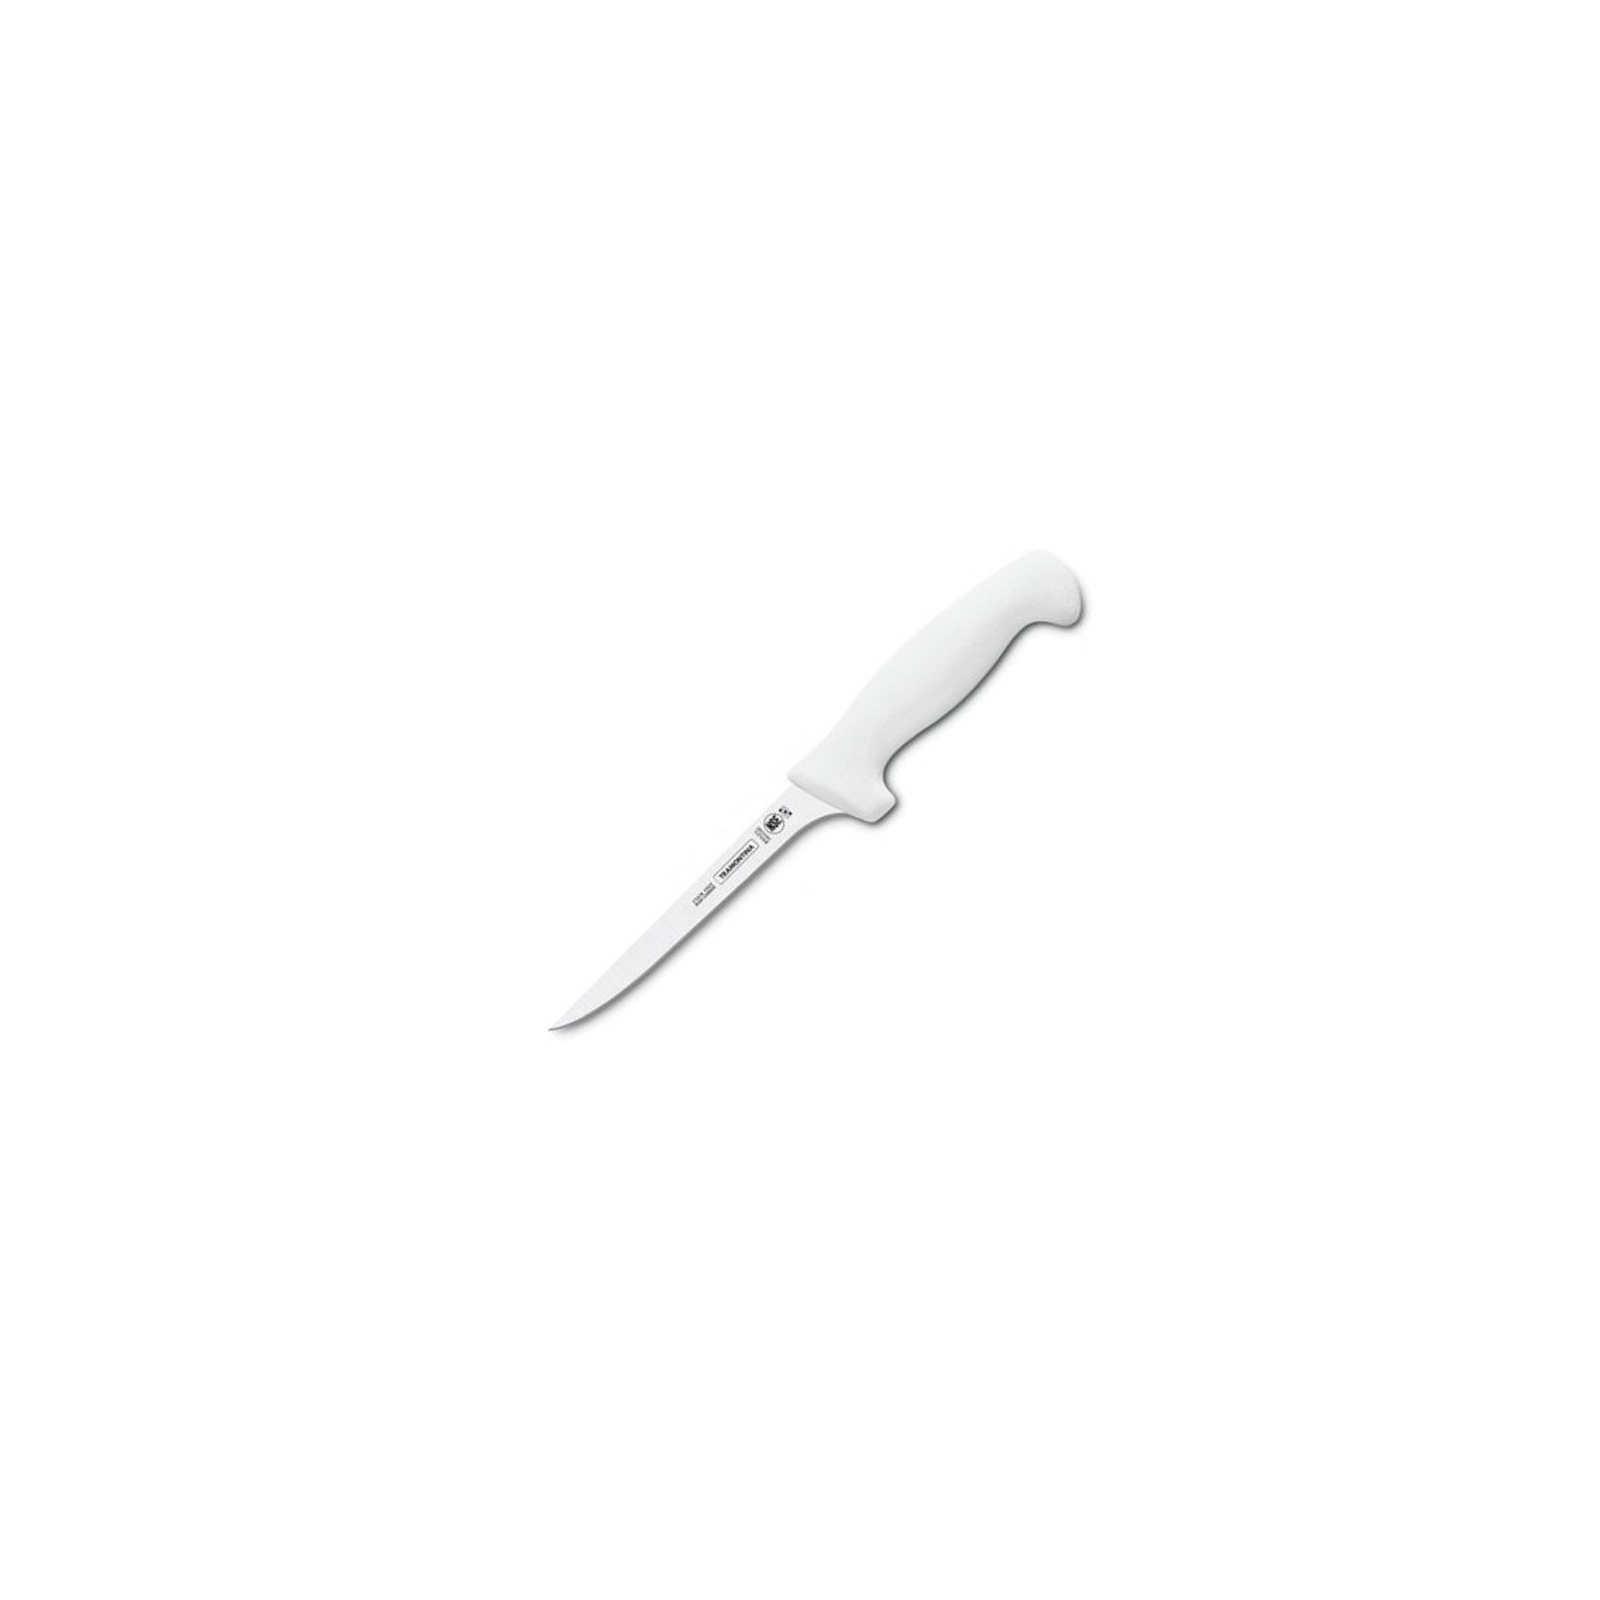 Кухонный нож Tramontina Professional Master разделочный 152 мм White (24635/086)